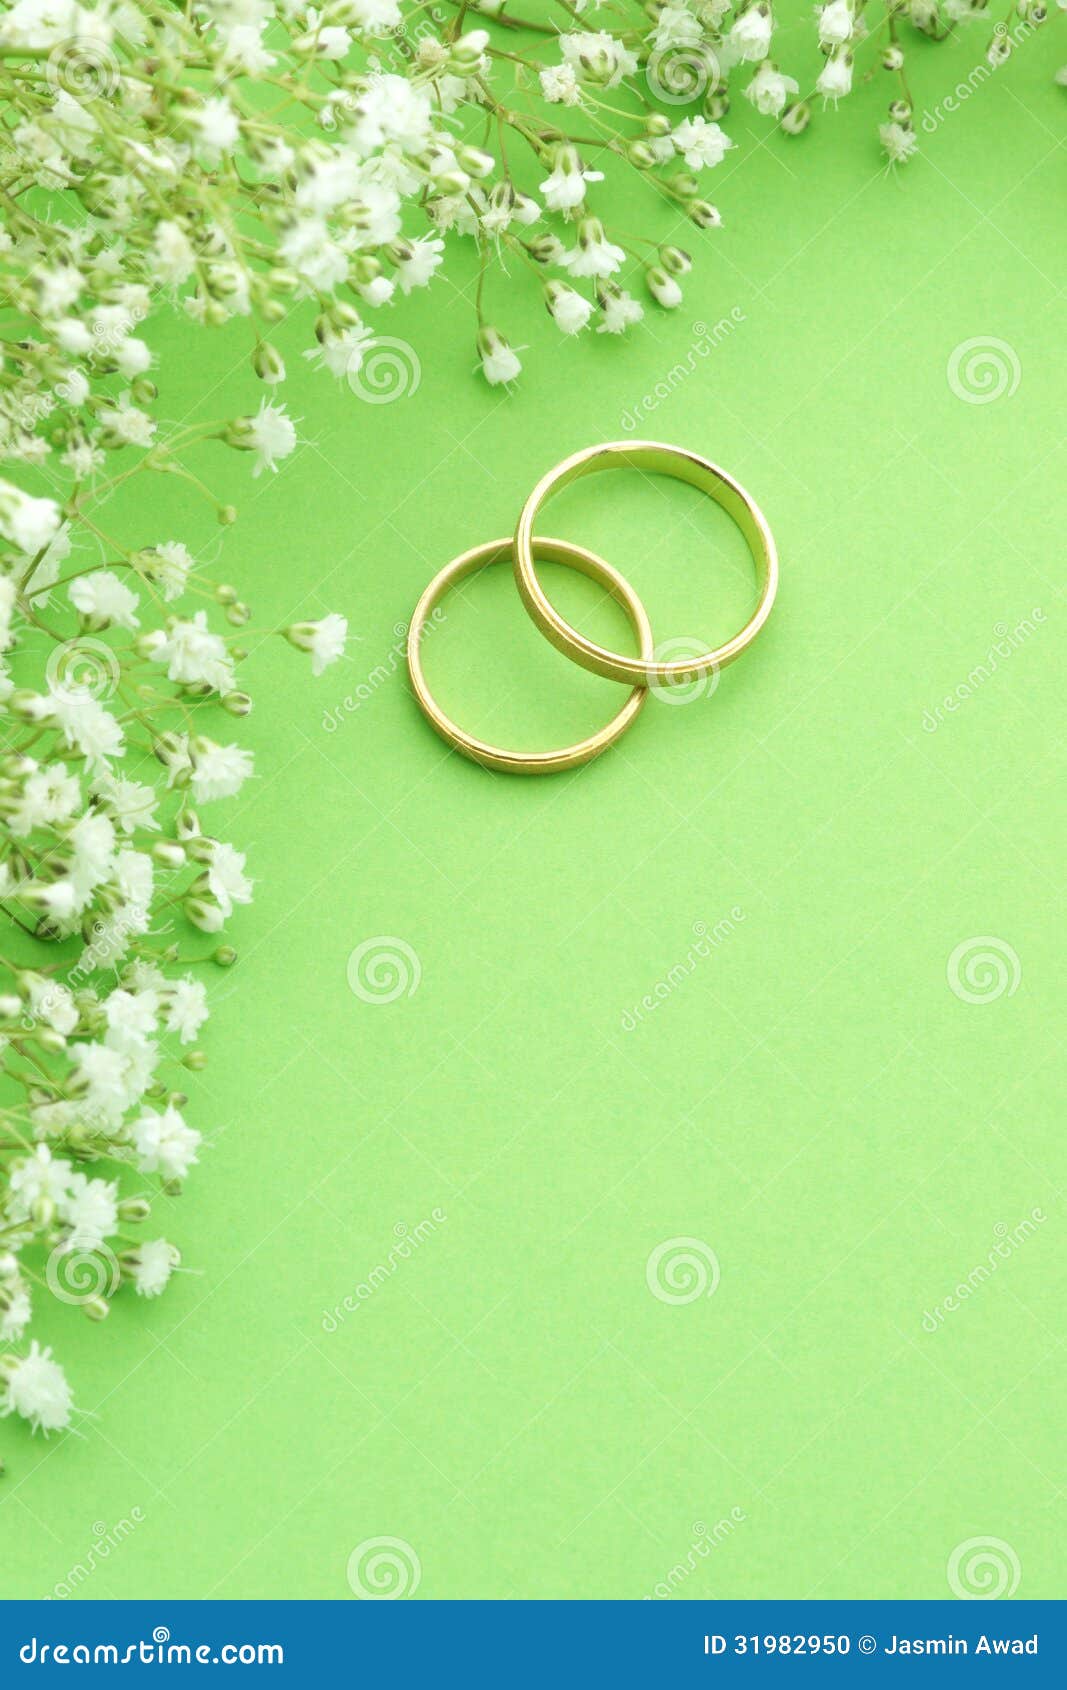 Wedding invitation stock photo. Image of jewelry, green - 31982950